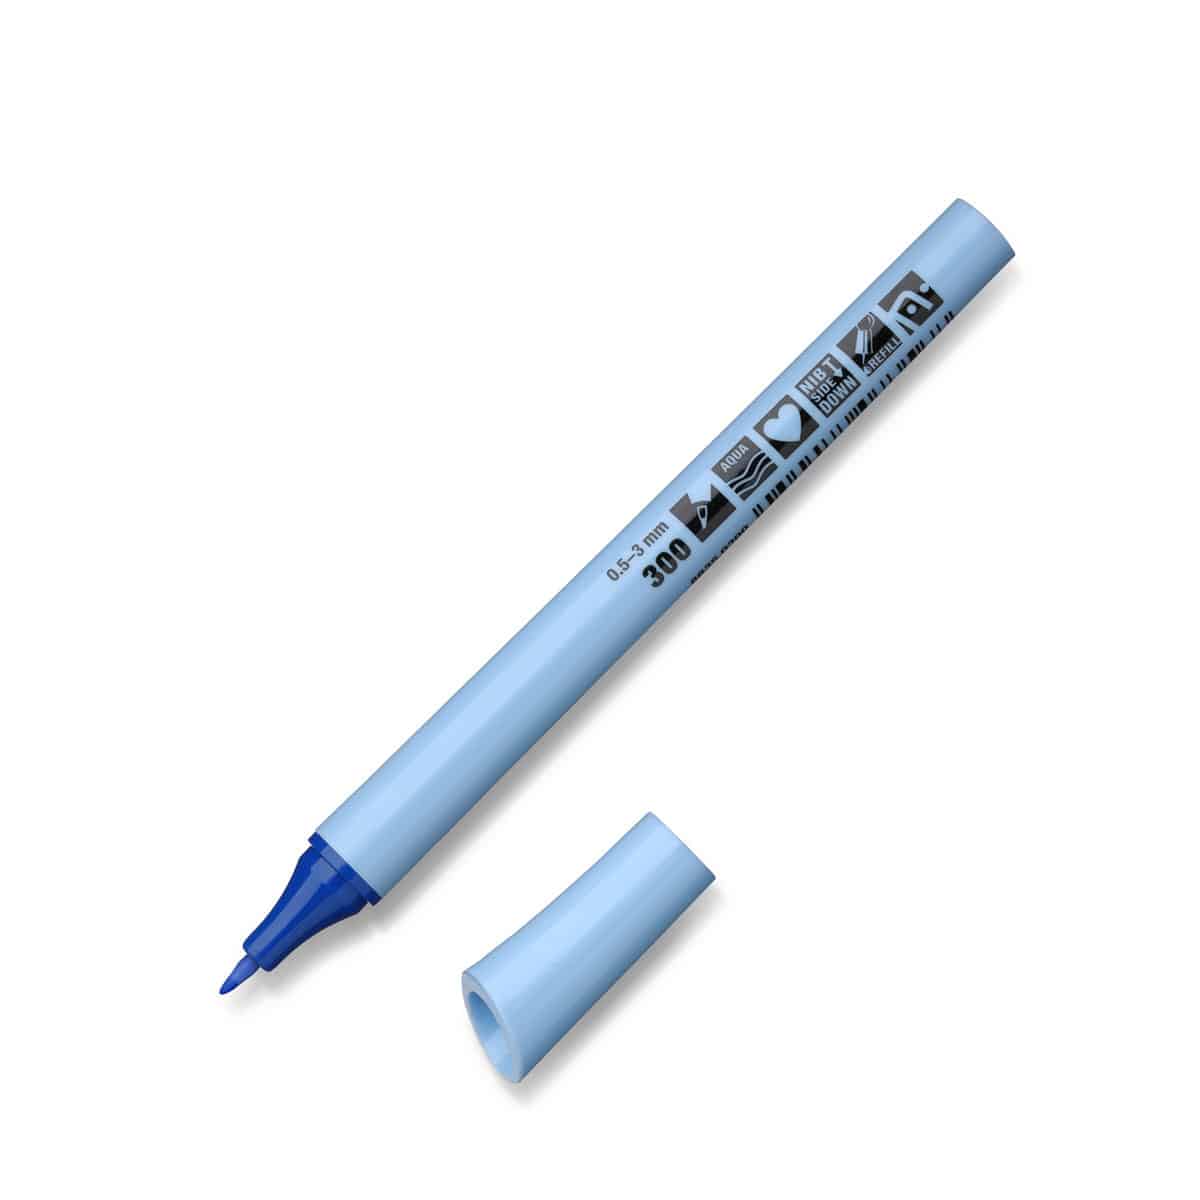 Neuland FineOne® Flex, flexible fiber nib 0.5-3 mm, single colors- 300 blau